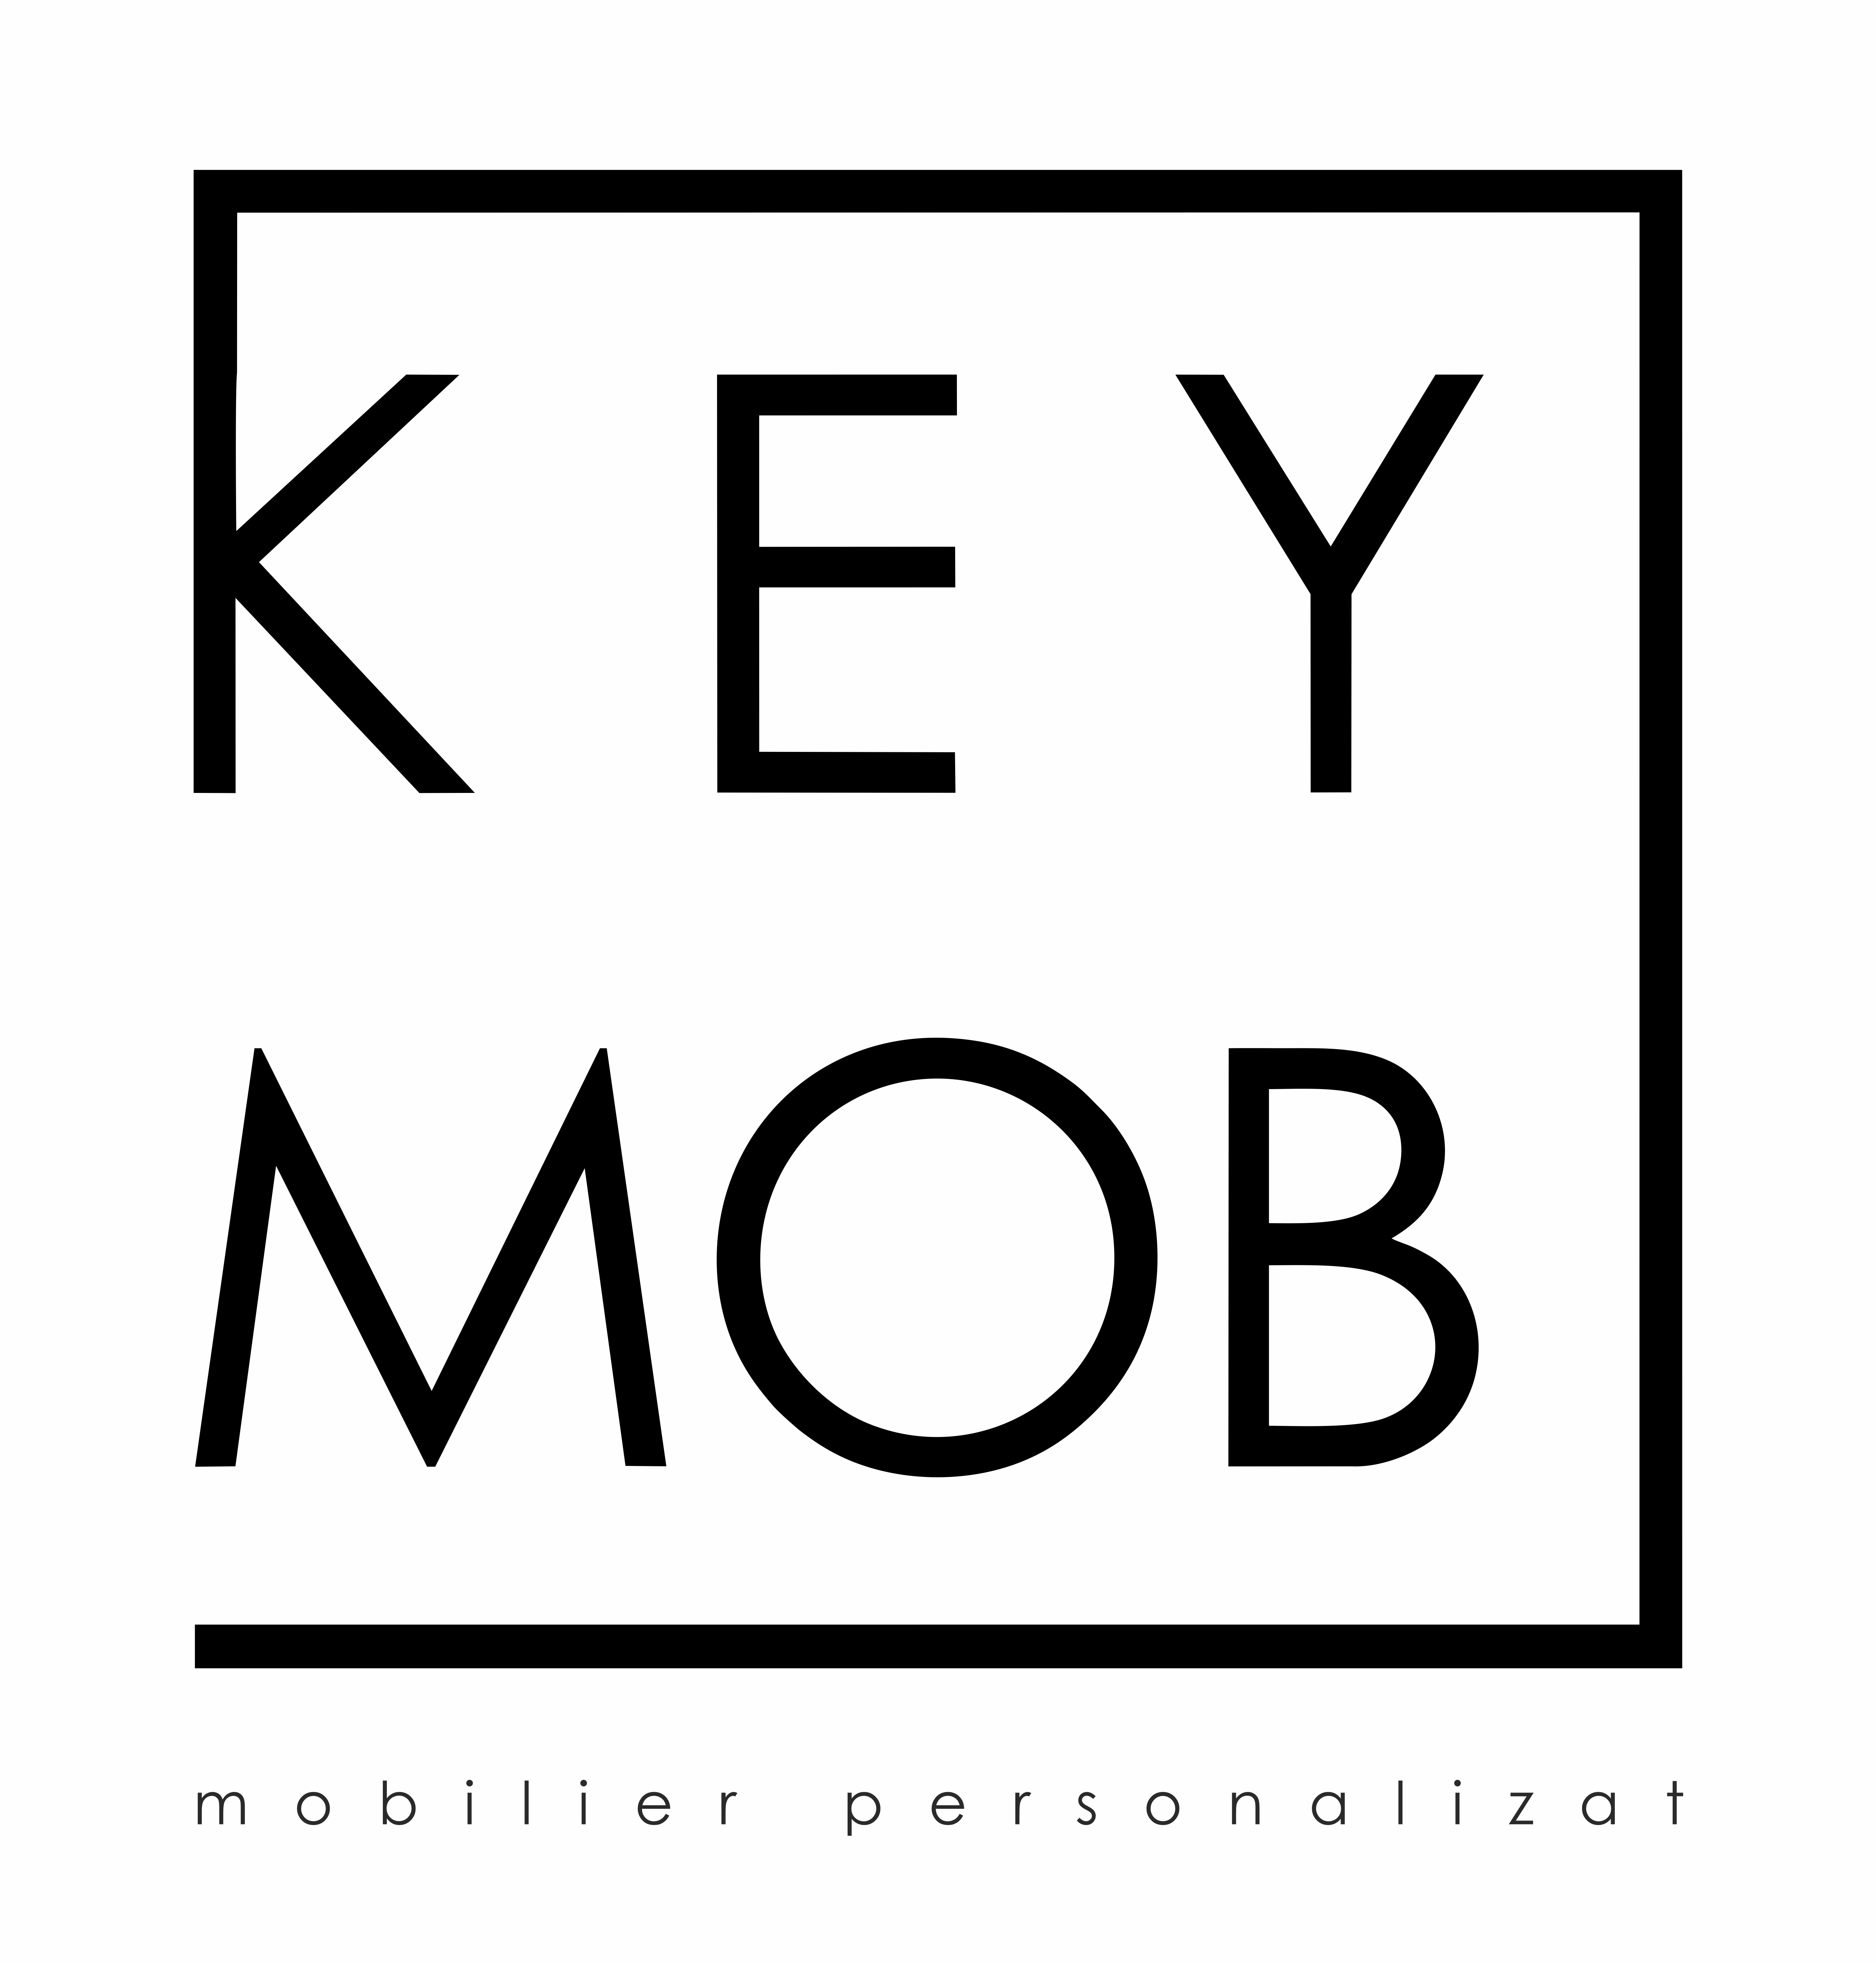 Key Mob logo